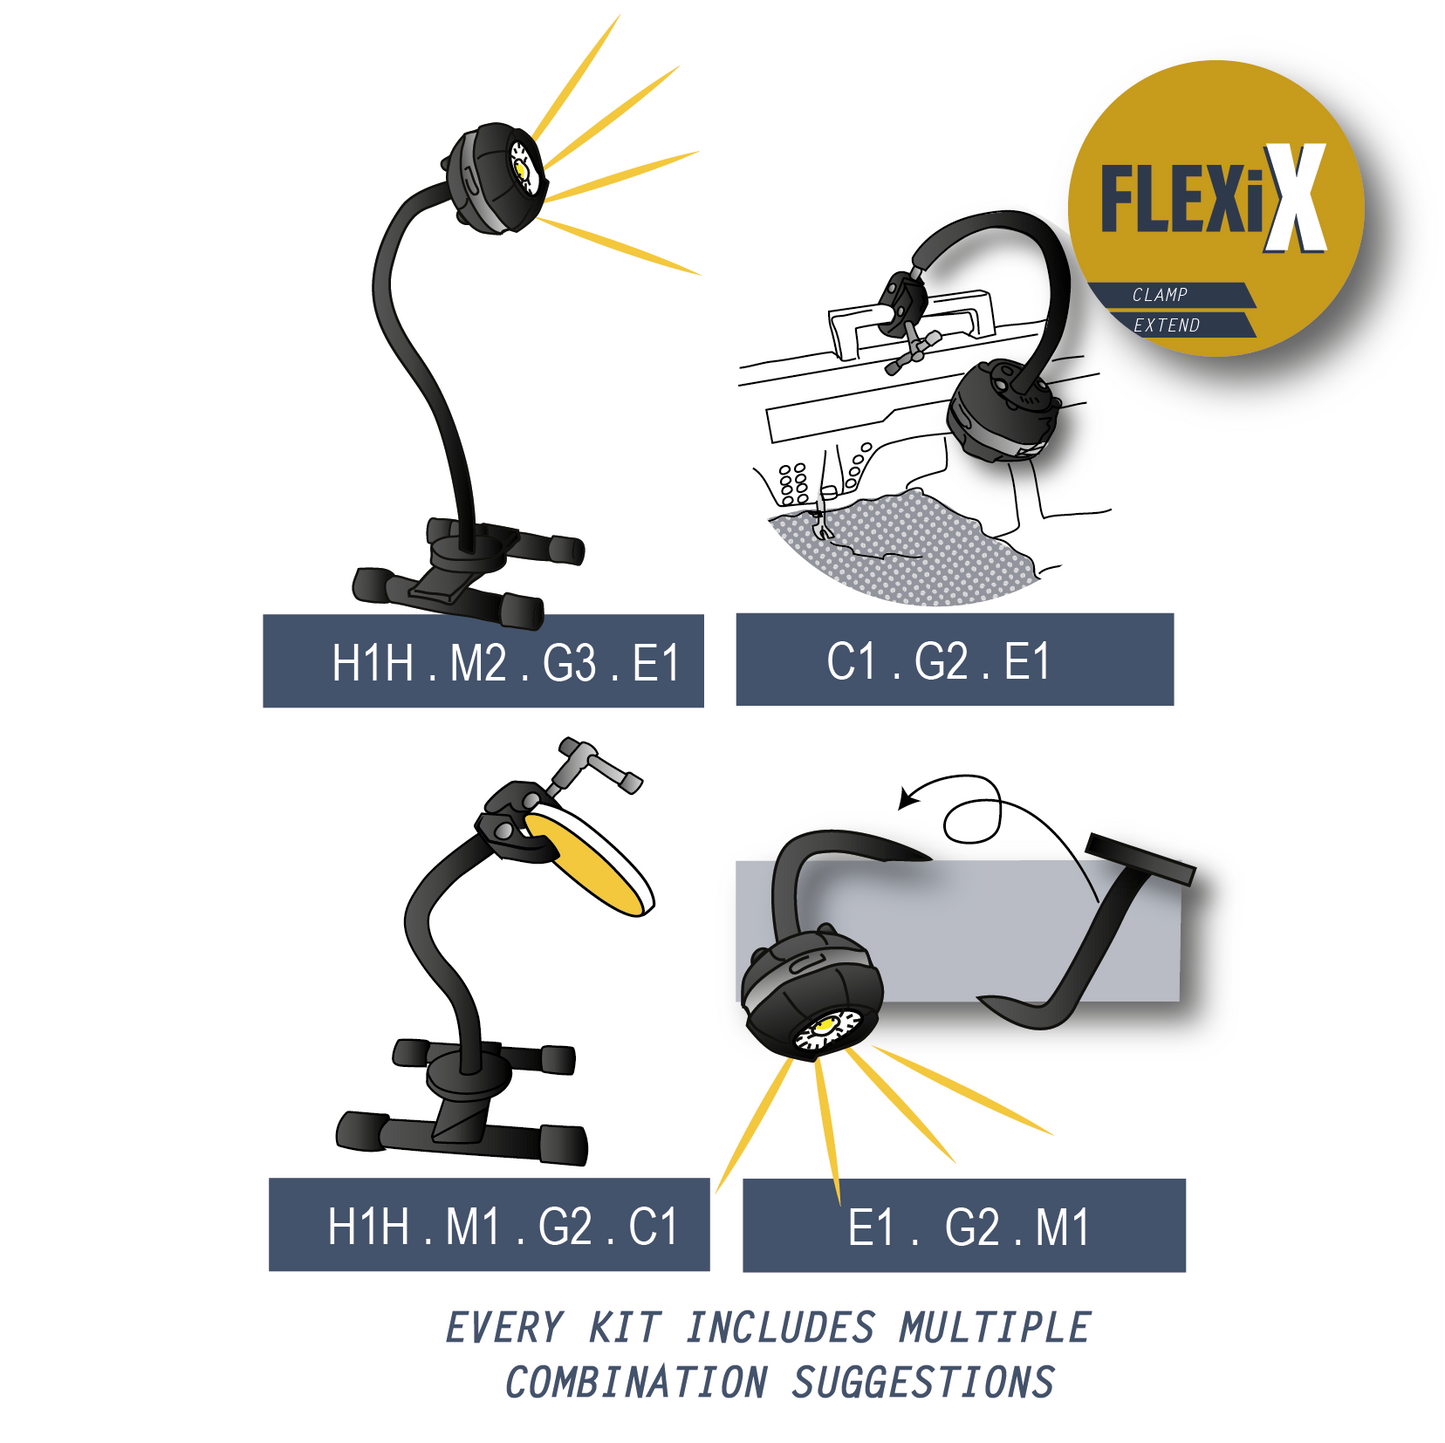 FLEXi X kit